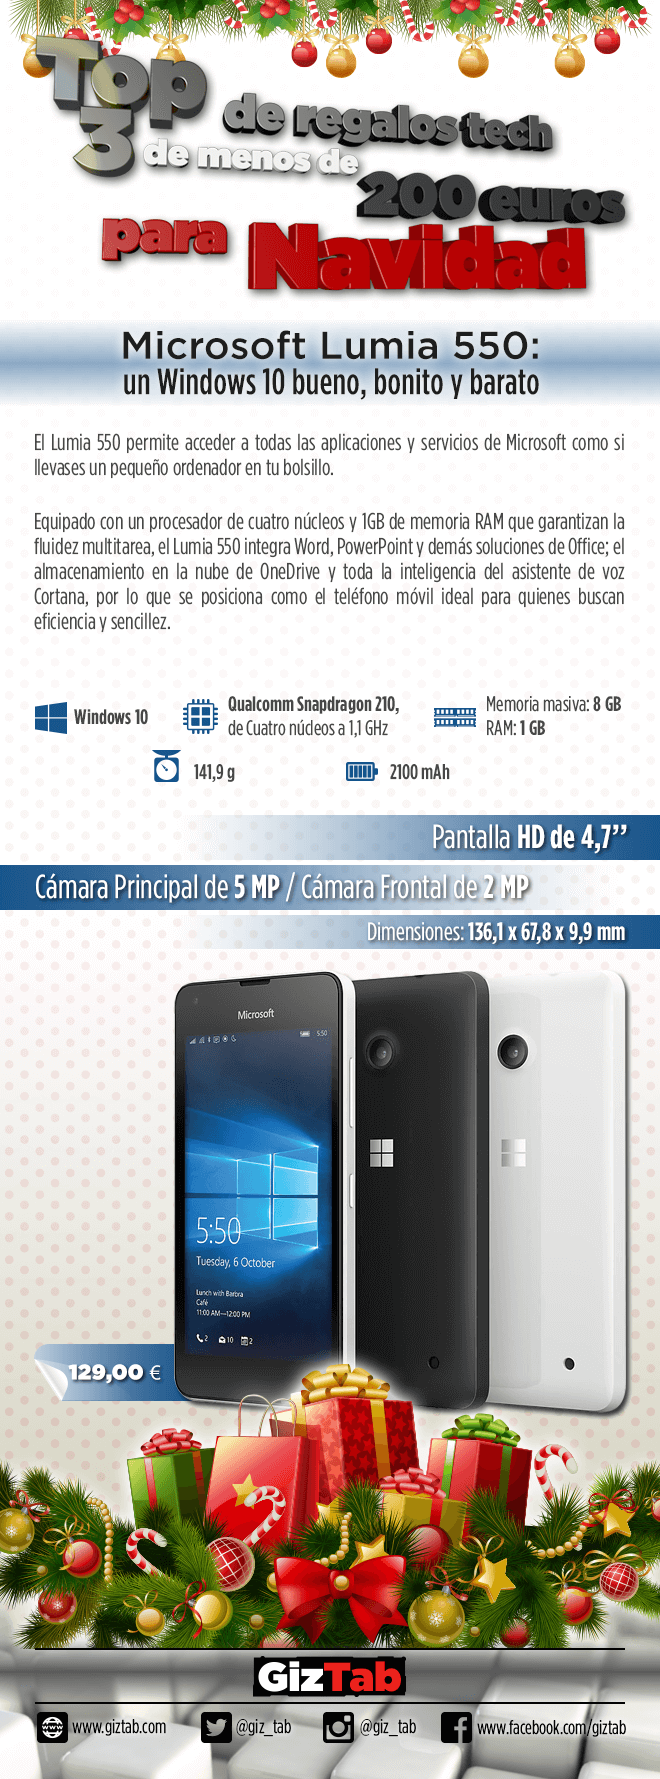 Microsoft Lumia 550_Infografía (1)